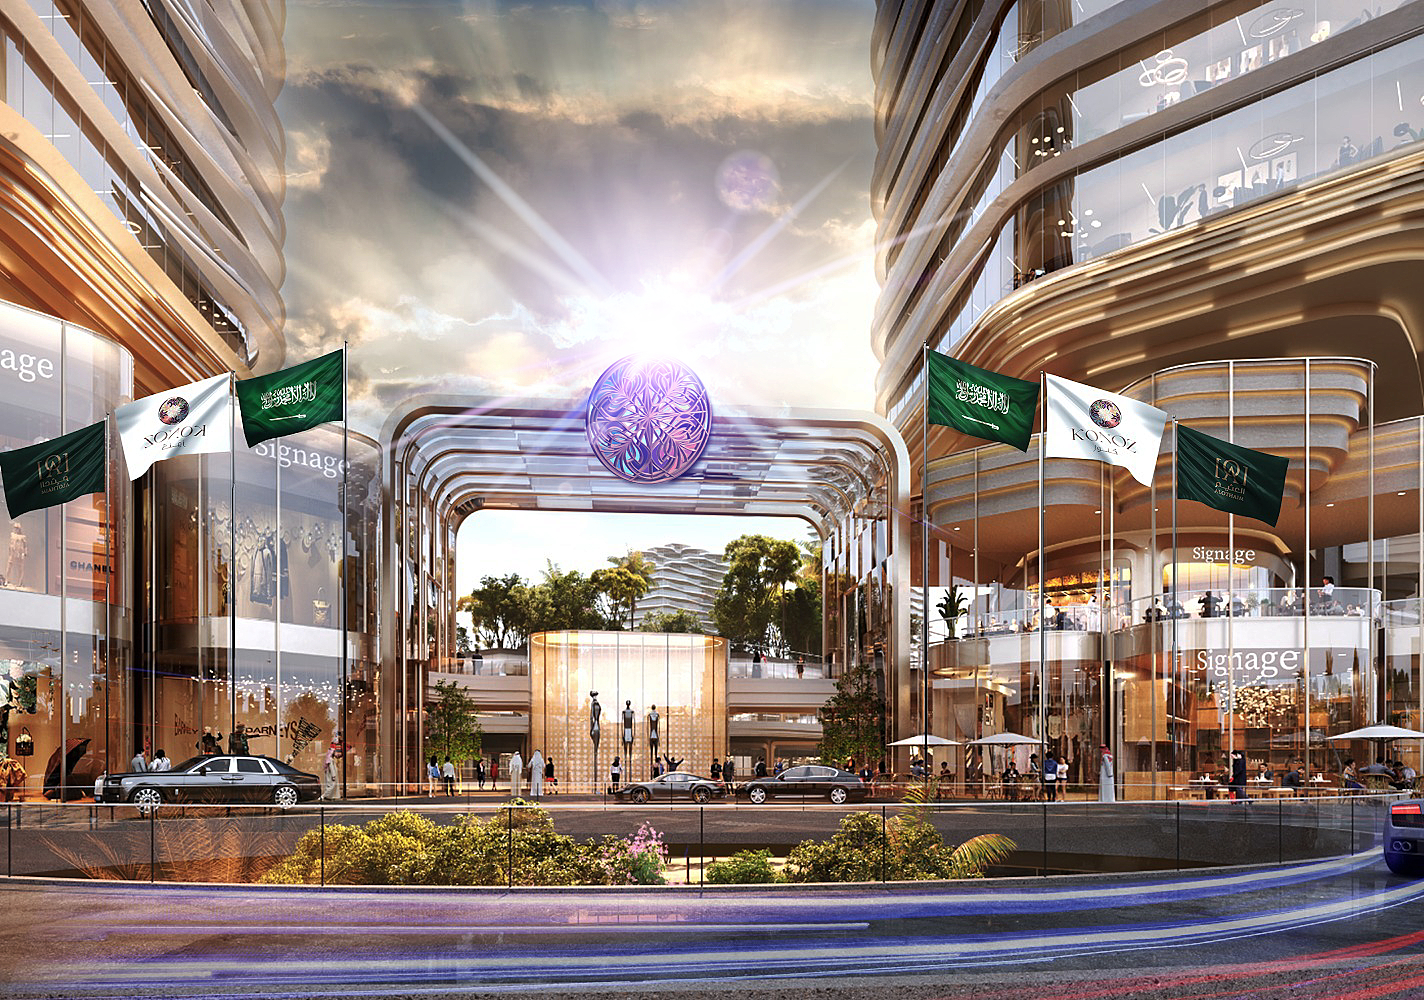 Abdullah Al-Othaim Investment Company has unveiled the ambitious "Konoz" project in Riyadh, Saudi Arabia